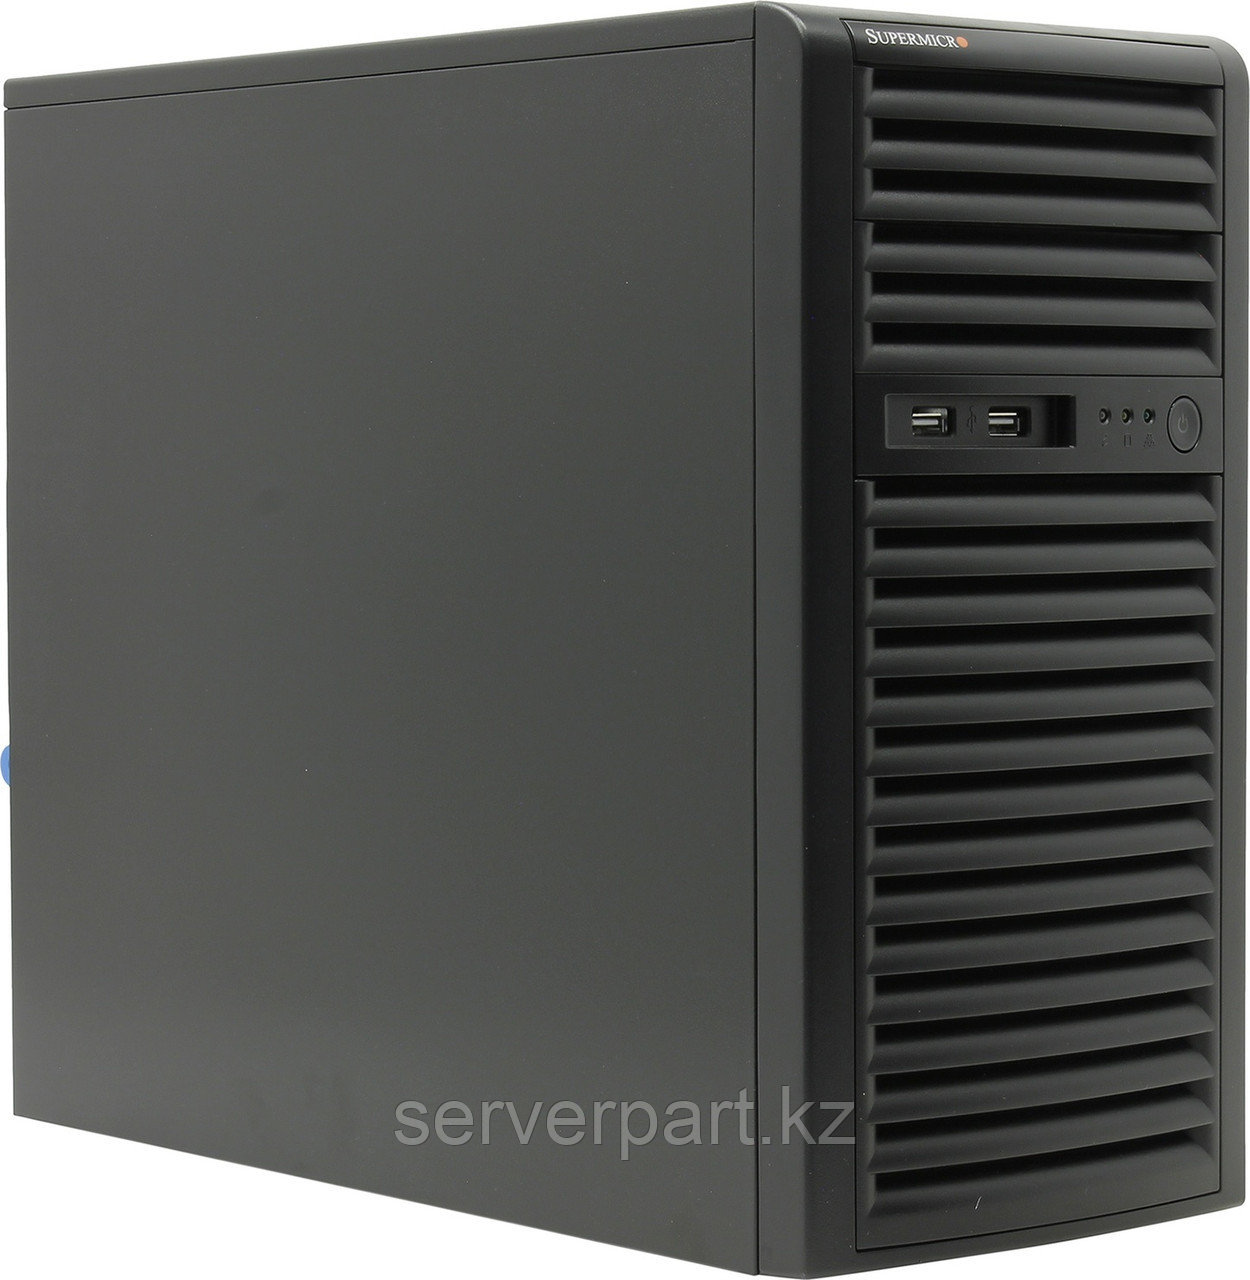 Сервер Supermicro SYS-5039C Tower 4LFF/4-core intel xeon E2124 3.3GHz/no RAM/no HDD up-to 4 nhs/RAID